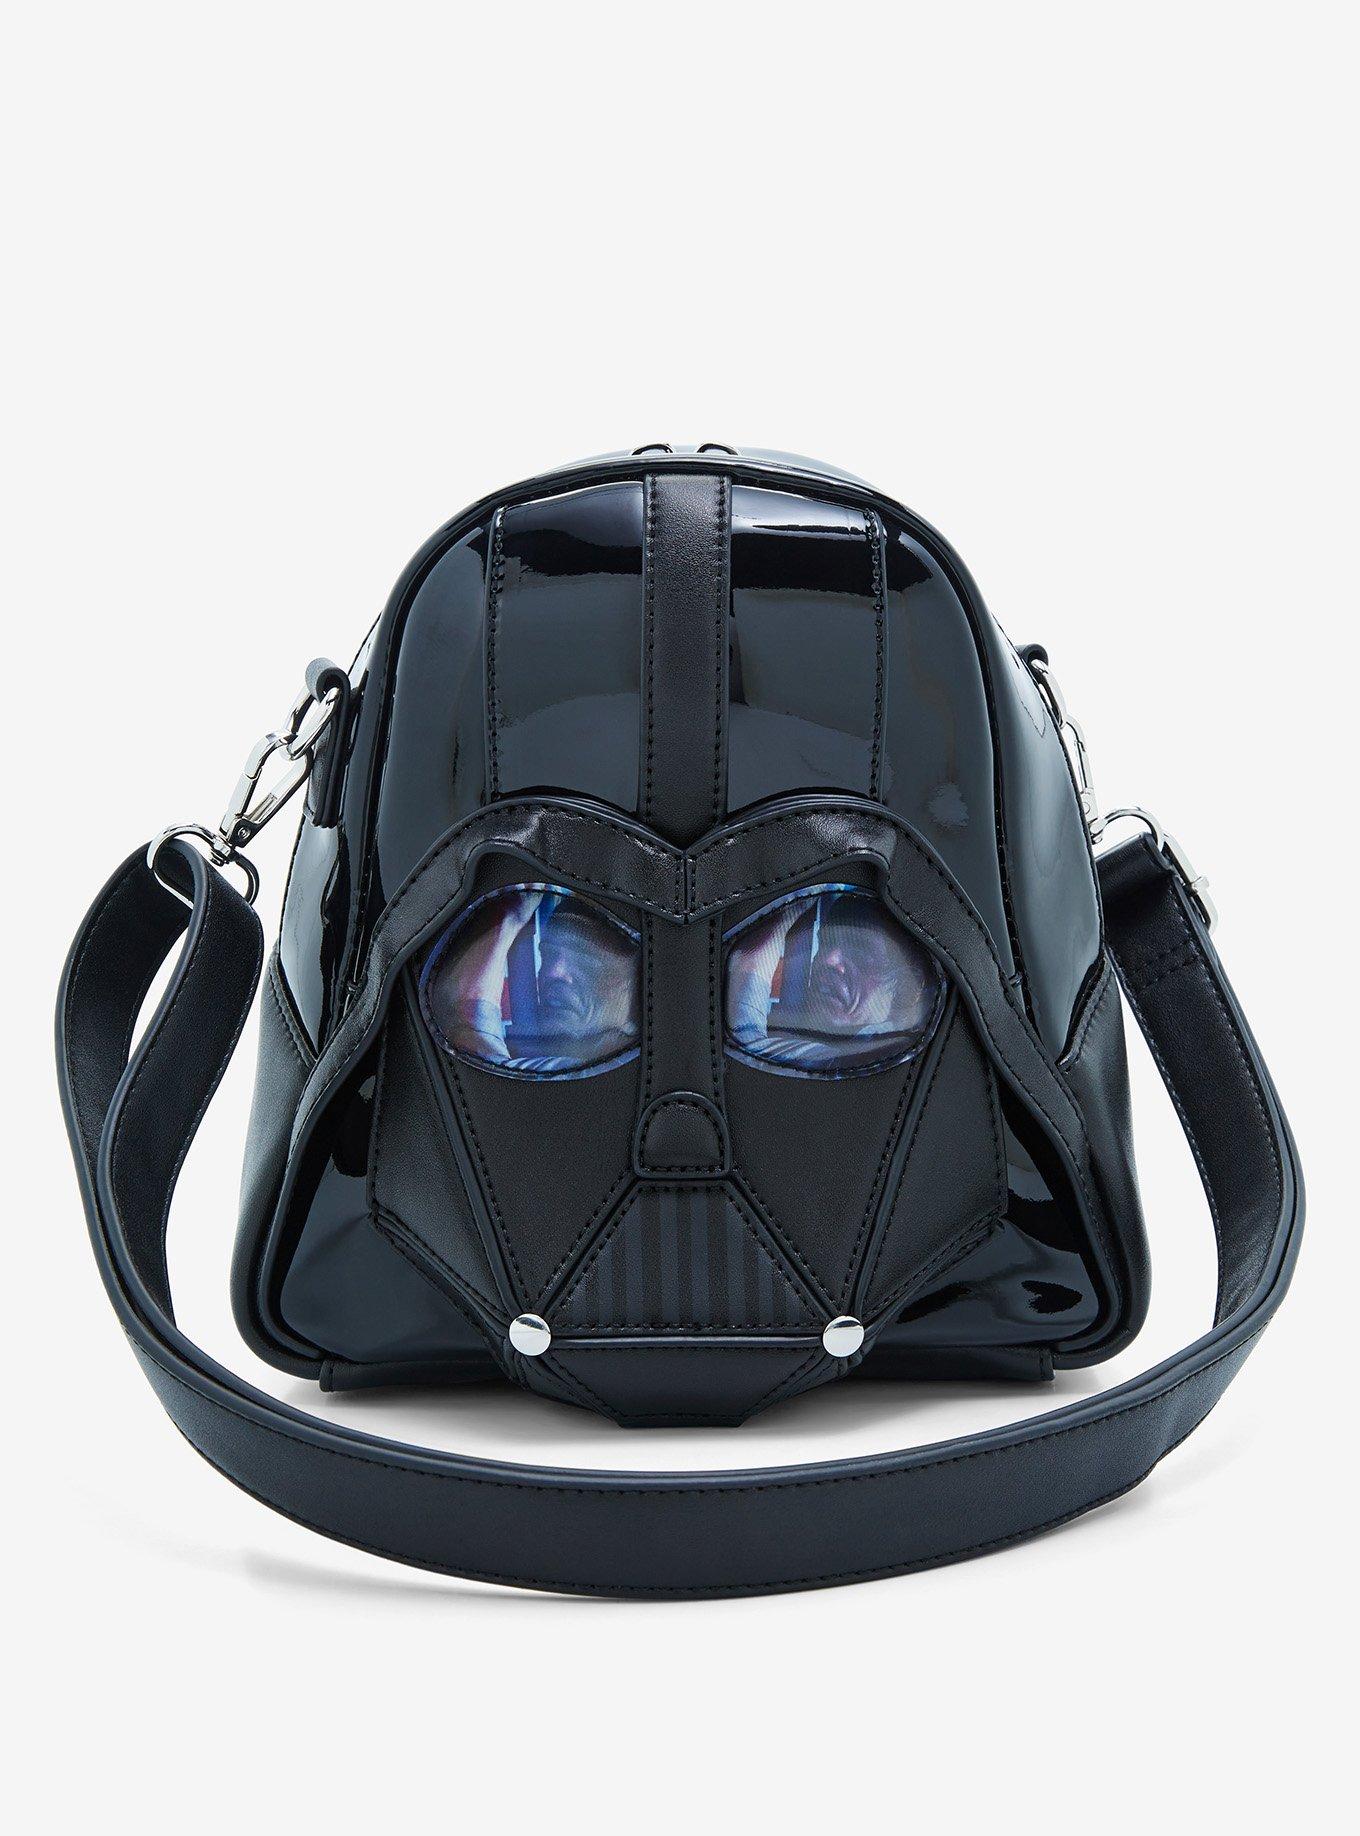 Buy Star Wars Light Side Saber Strap Crossbody Bag at Loungefly.